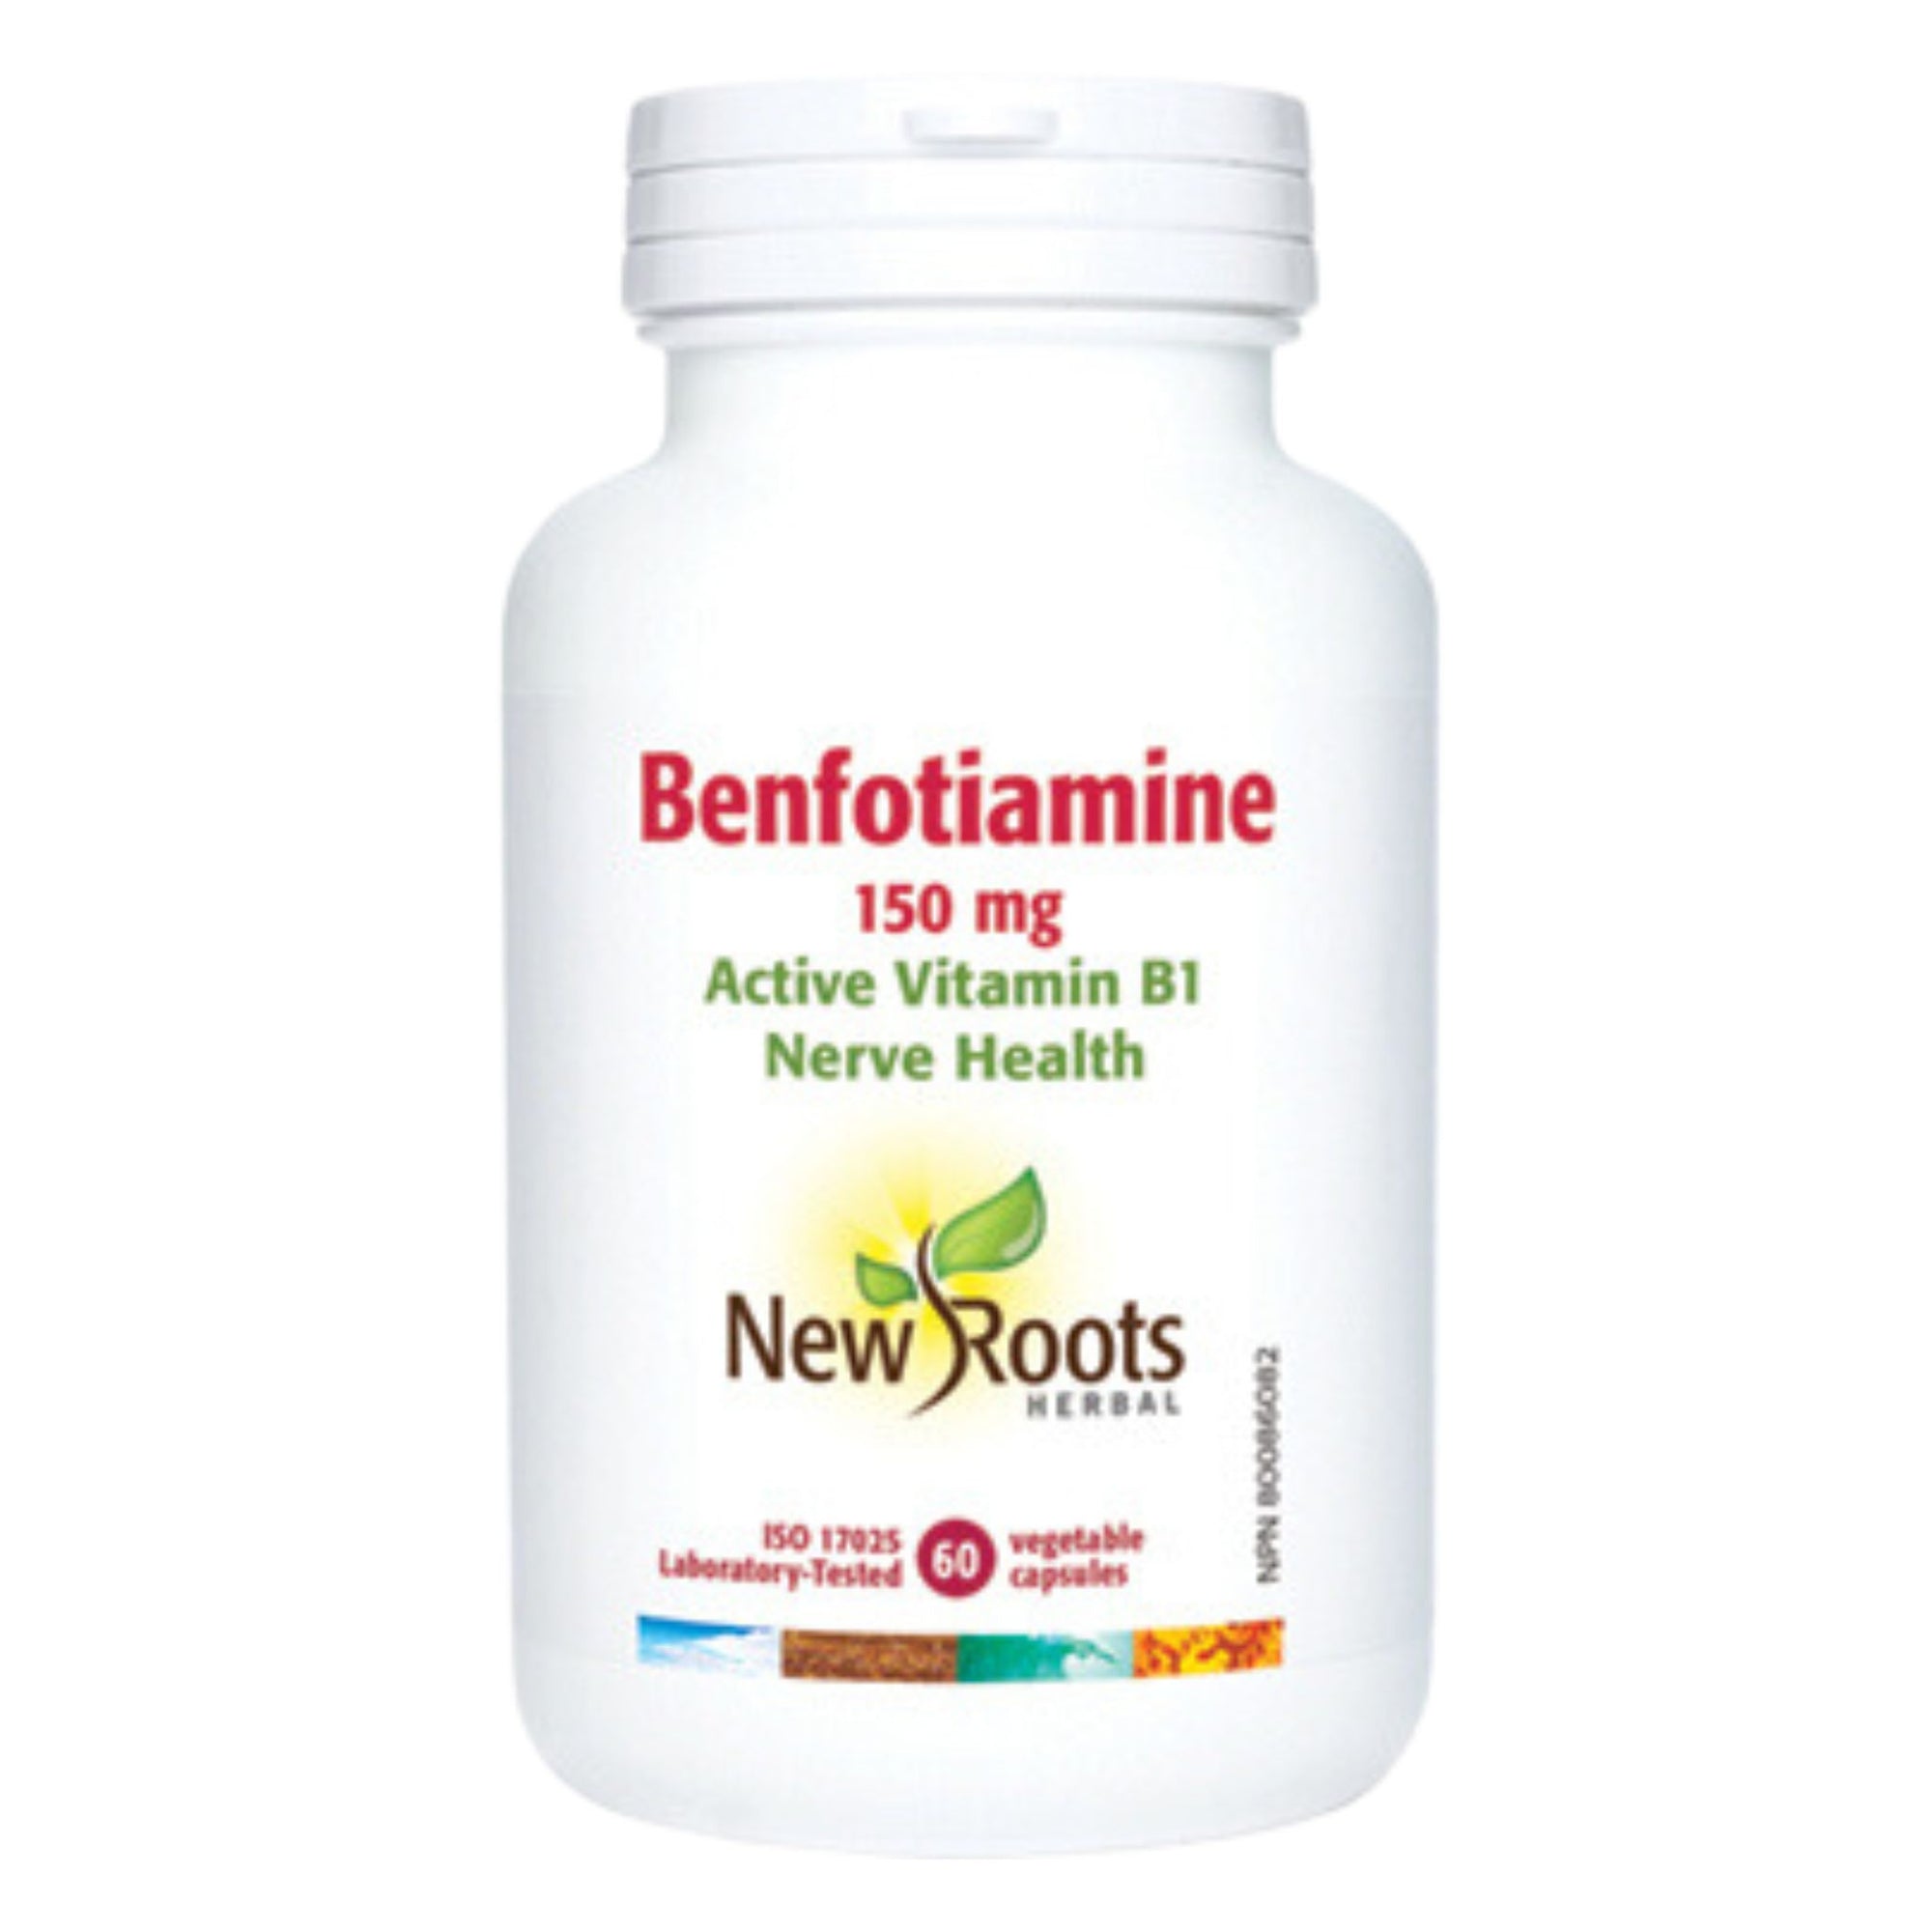 New Roots Befotiamine 150mg - Active Vitamin B1 - Nerve Health - 60 vegetable capsules